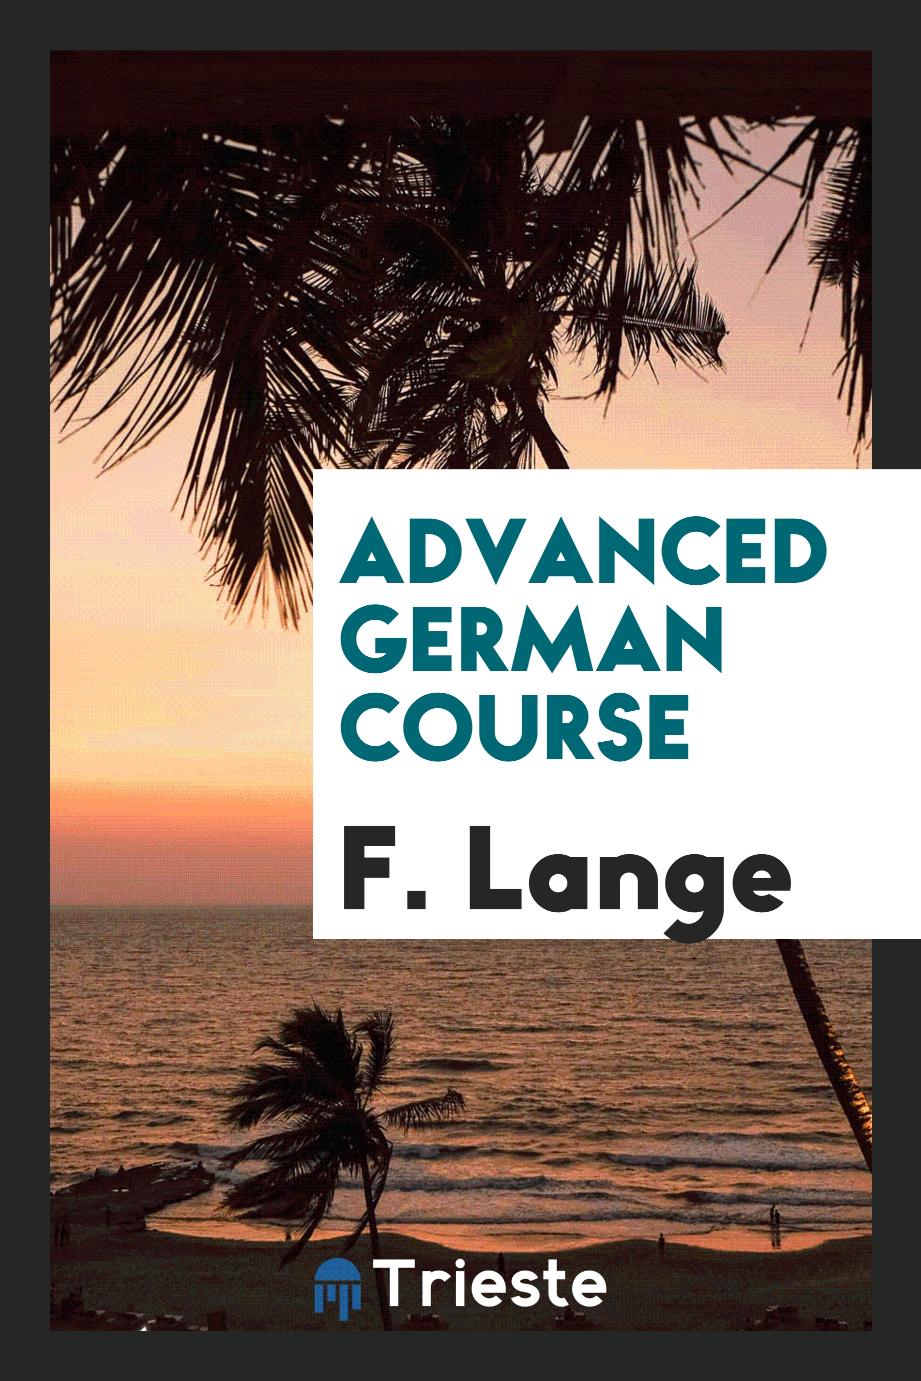 Advanced German course